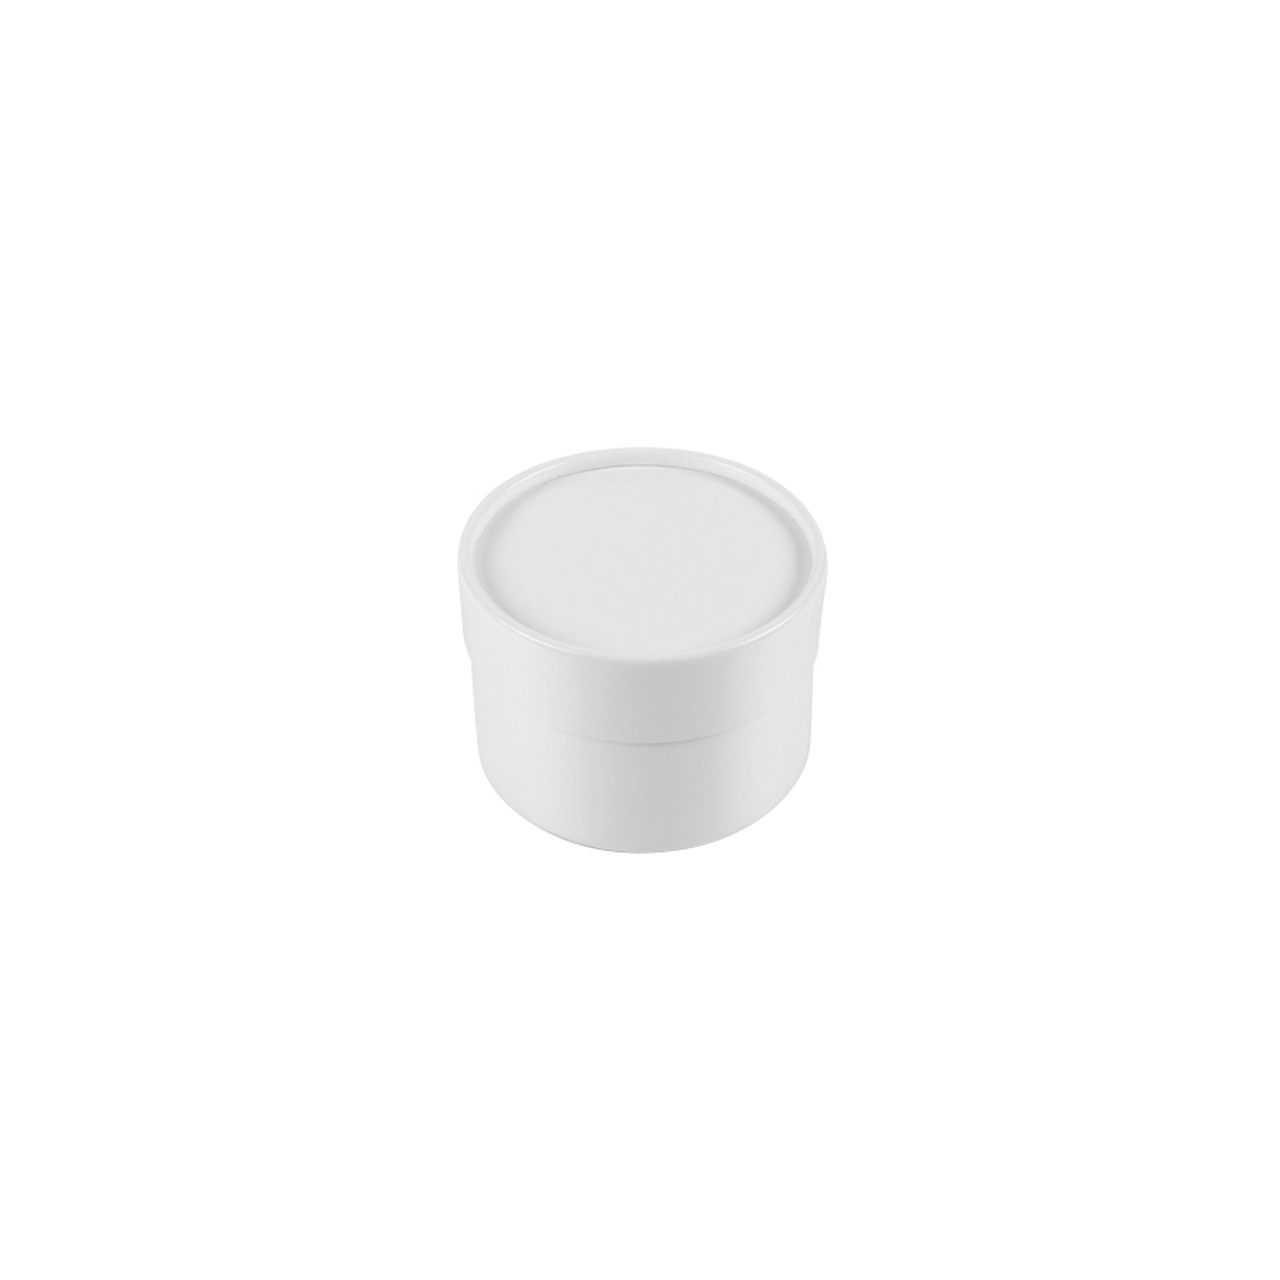 White Gloss Small Round Rigid Boxes 3-1/2" diam. x 2"h